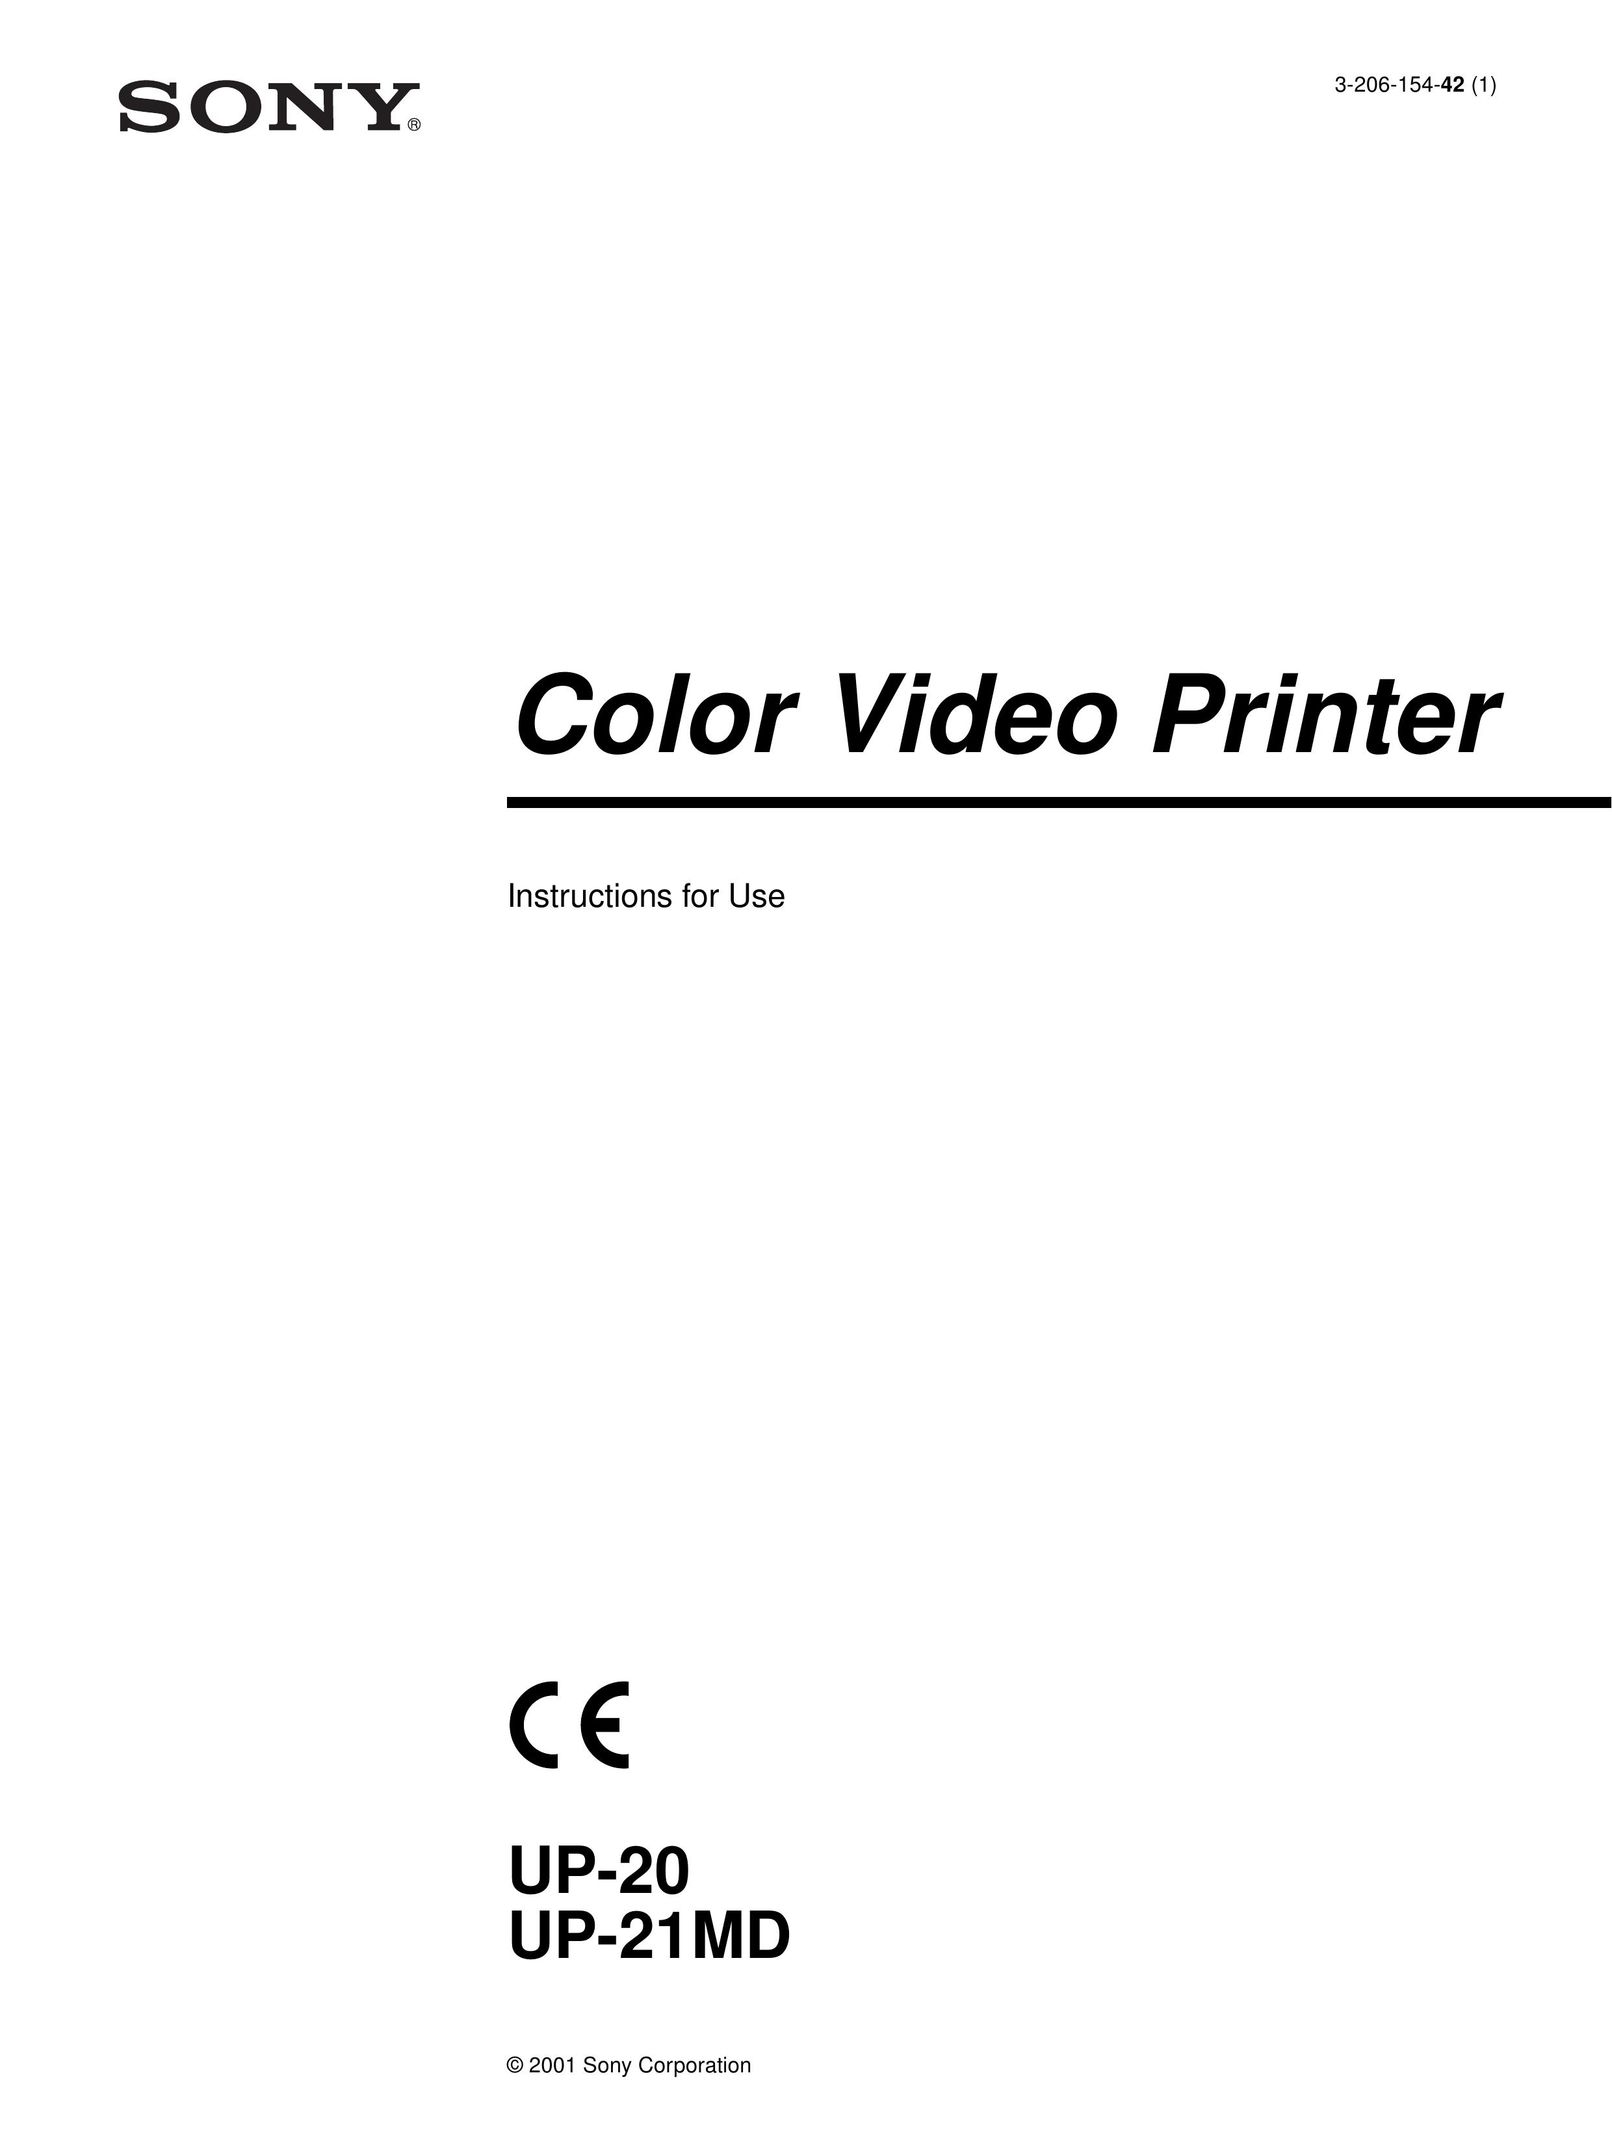 Sony UP-21MD Printer User Manual